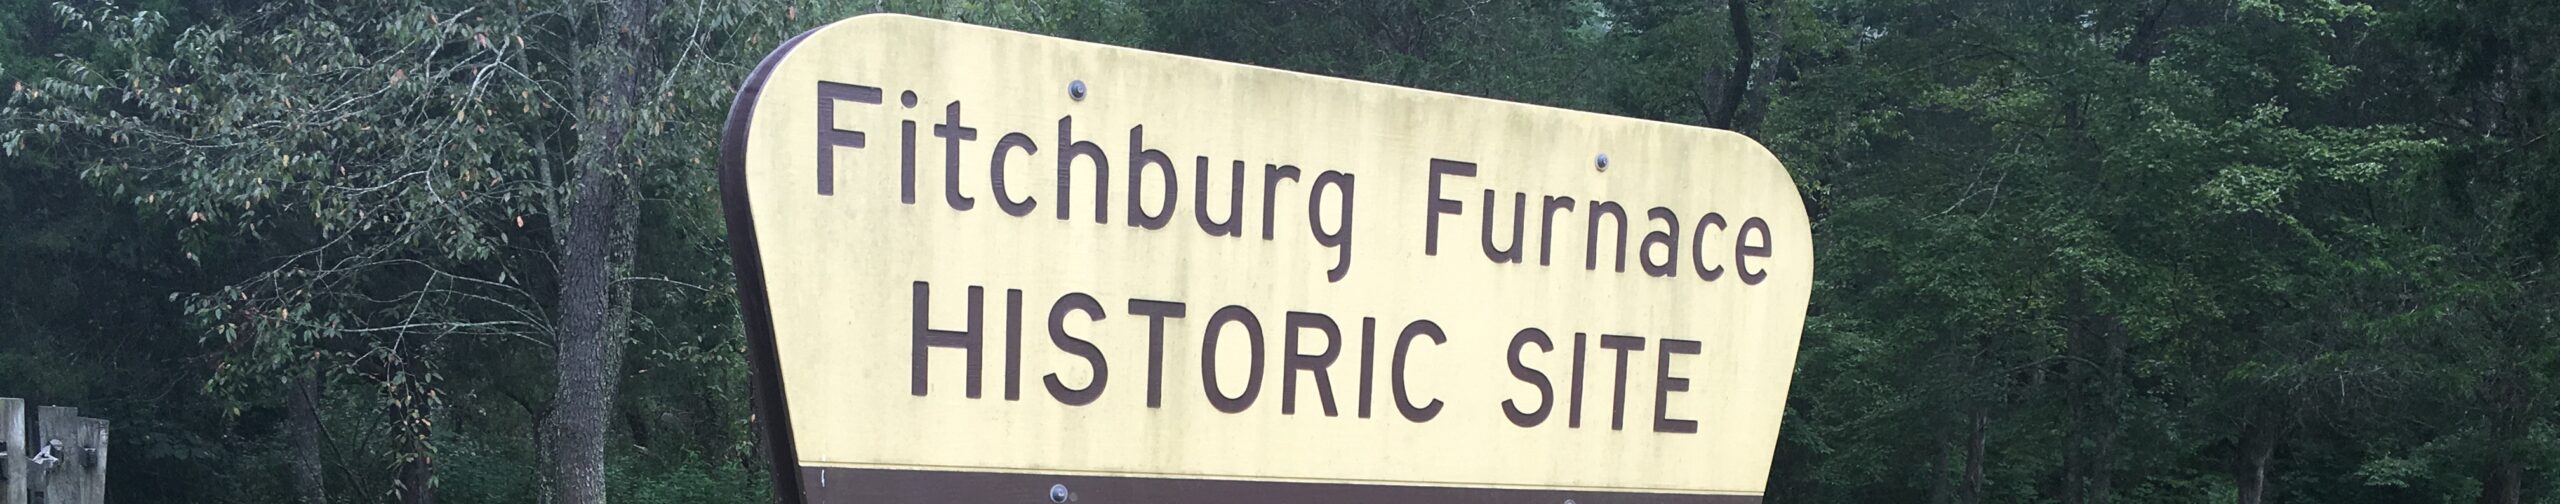 Fitchburg Furnace